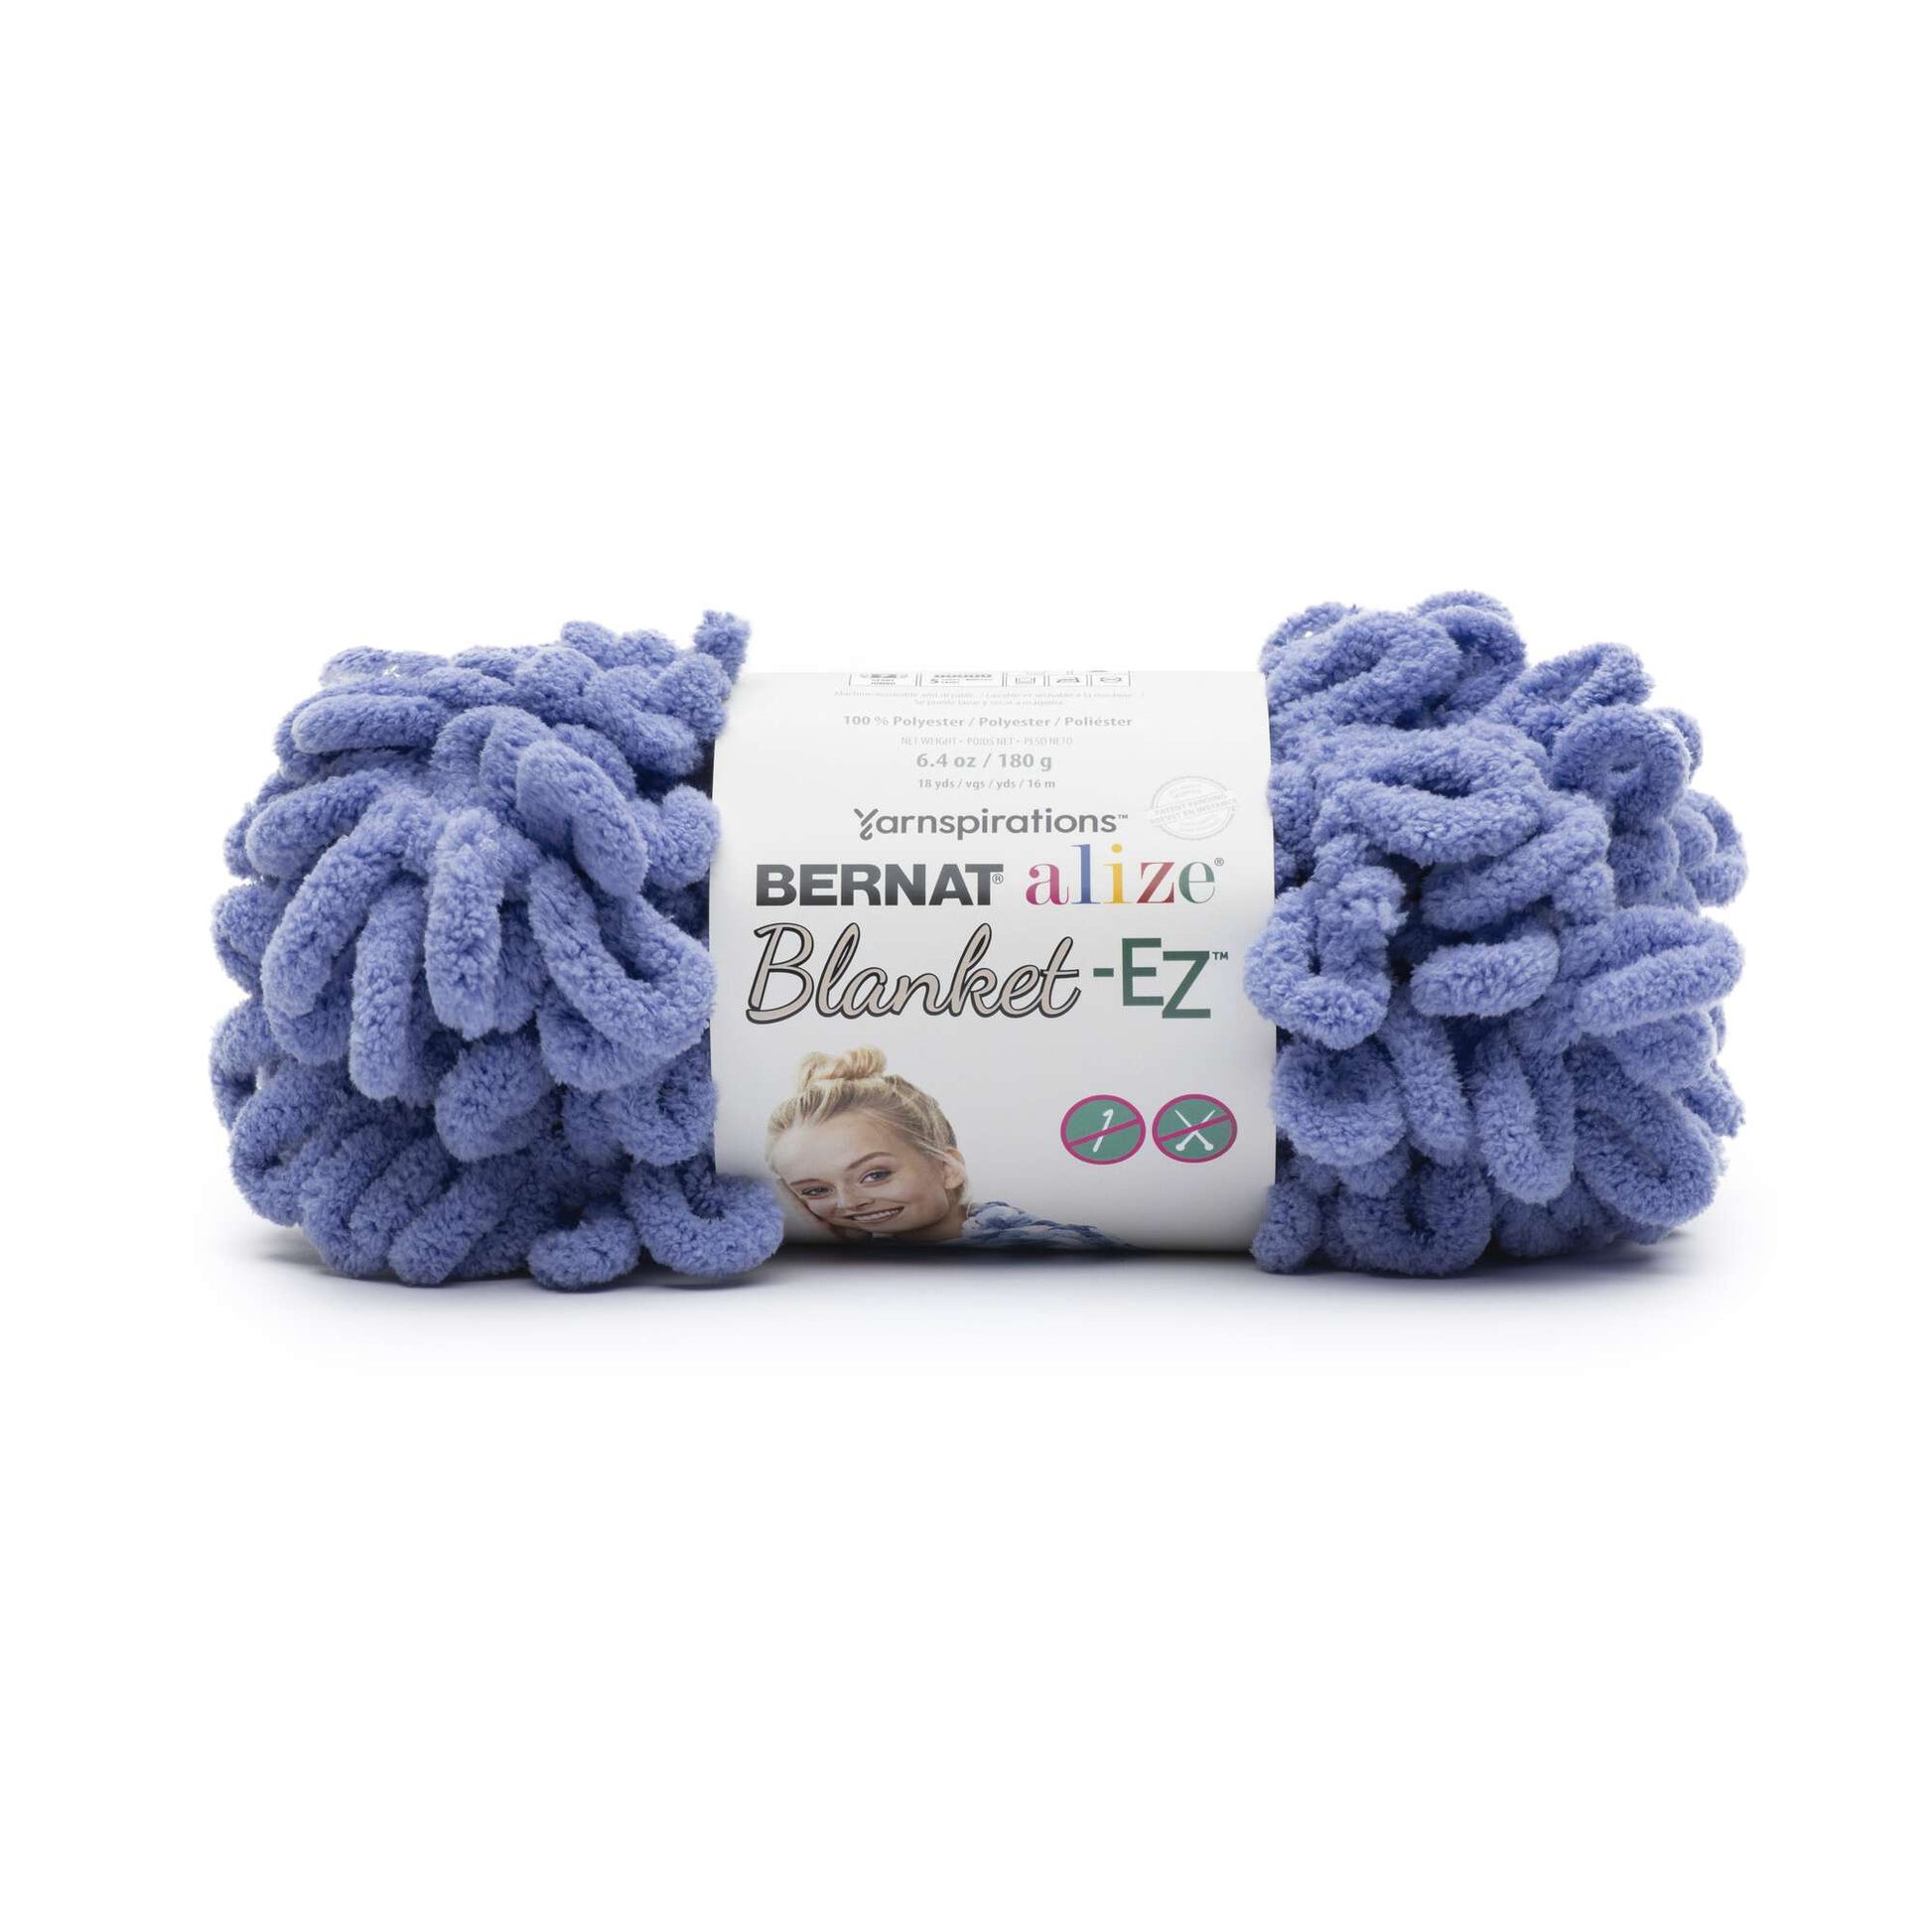 Bernat Alize Blanket-EZ Yarn - White Blue - 9323217